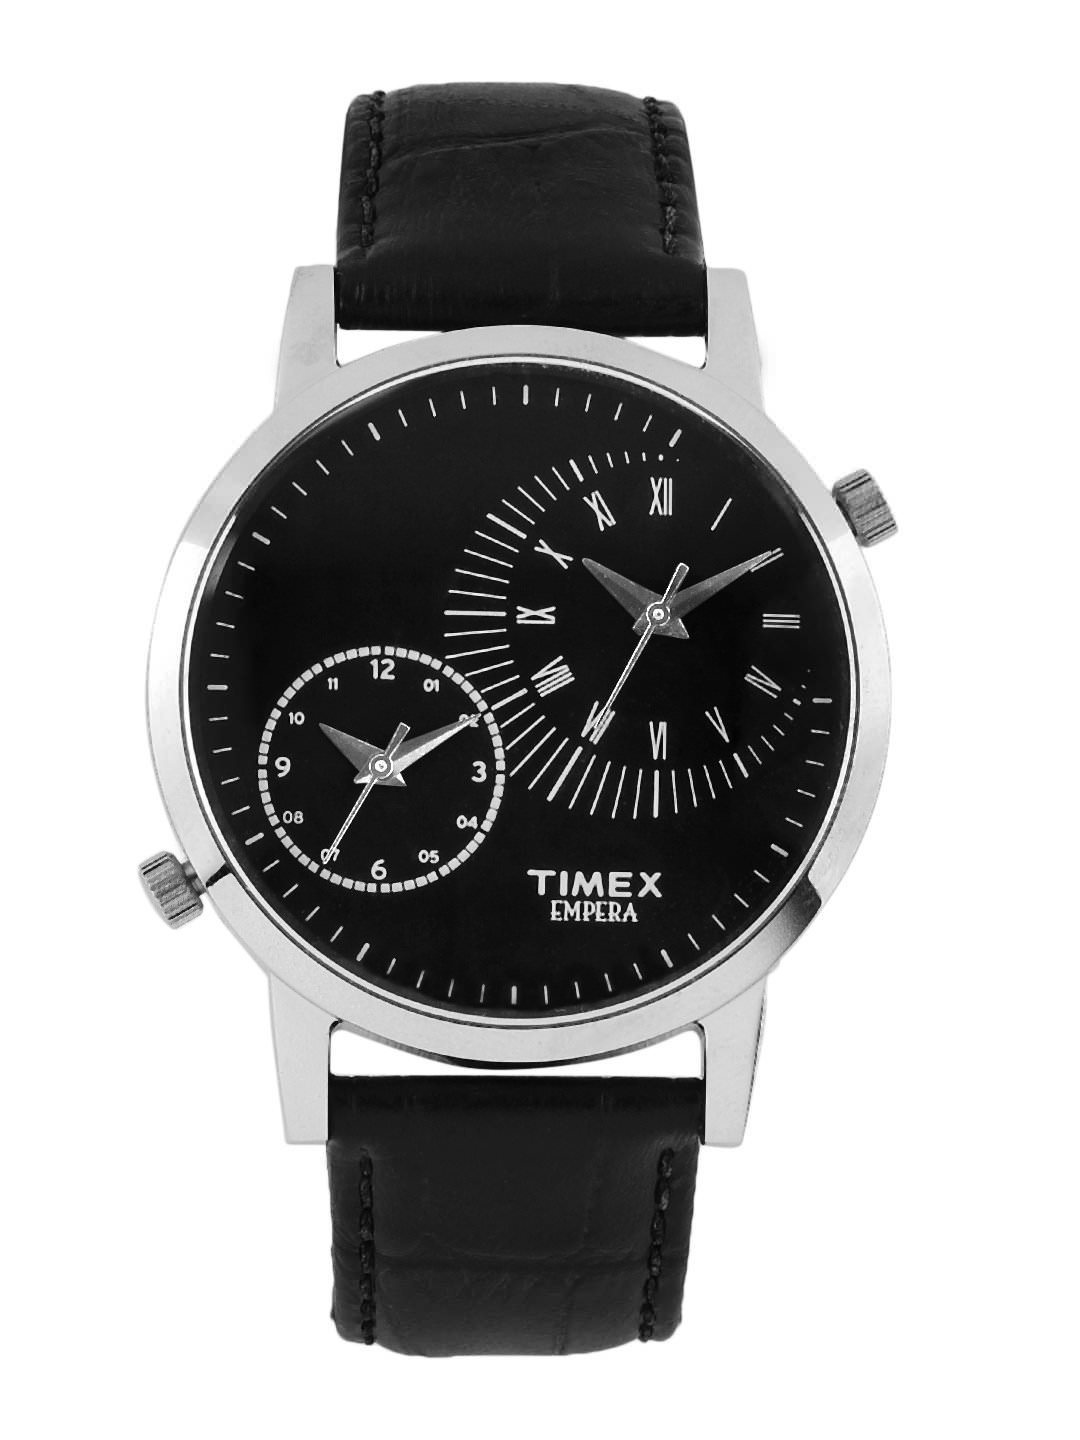 Timex Men Black Dial Watch